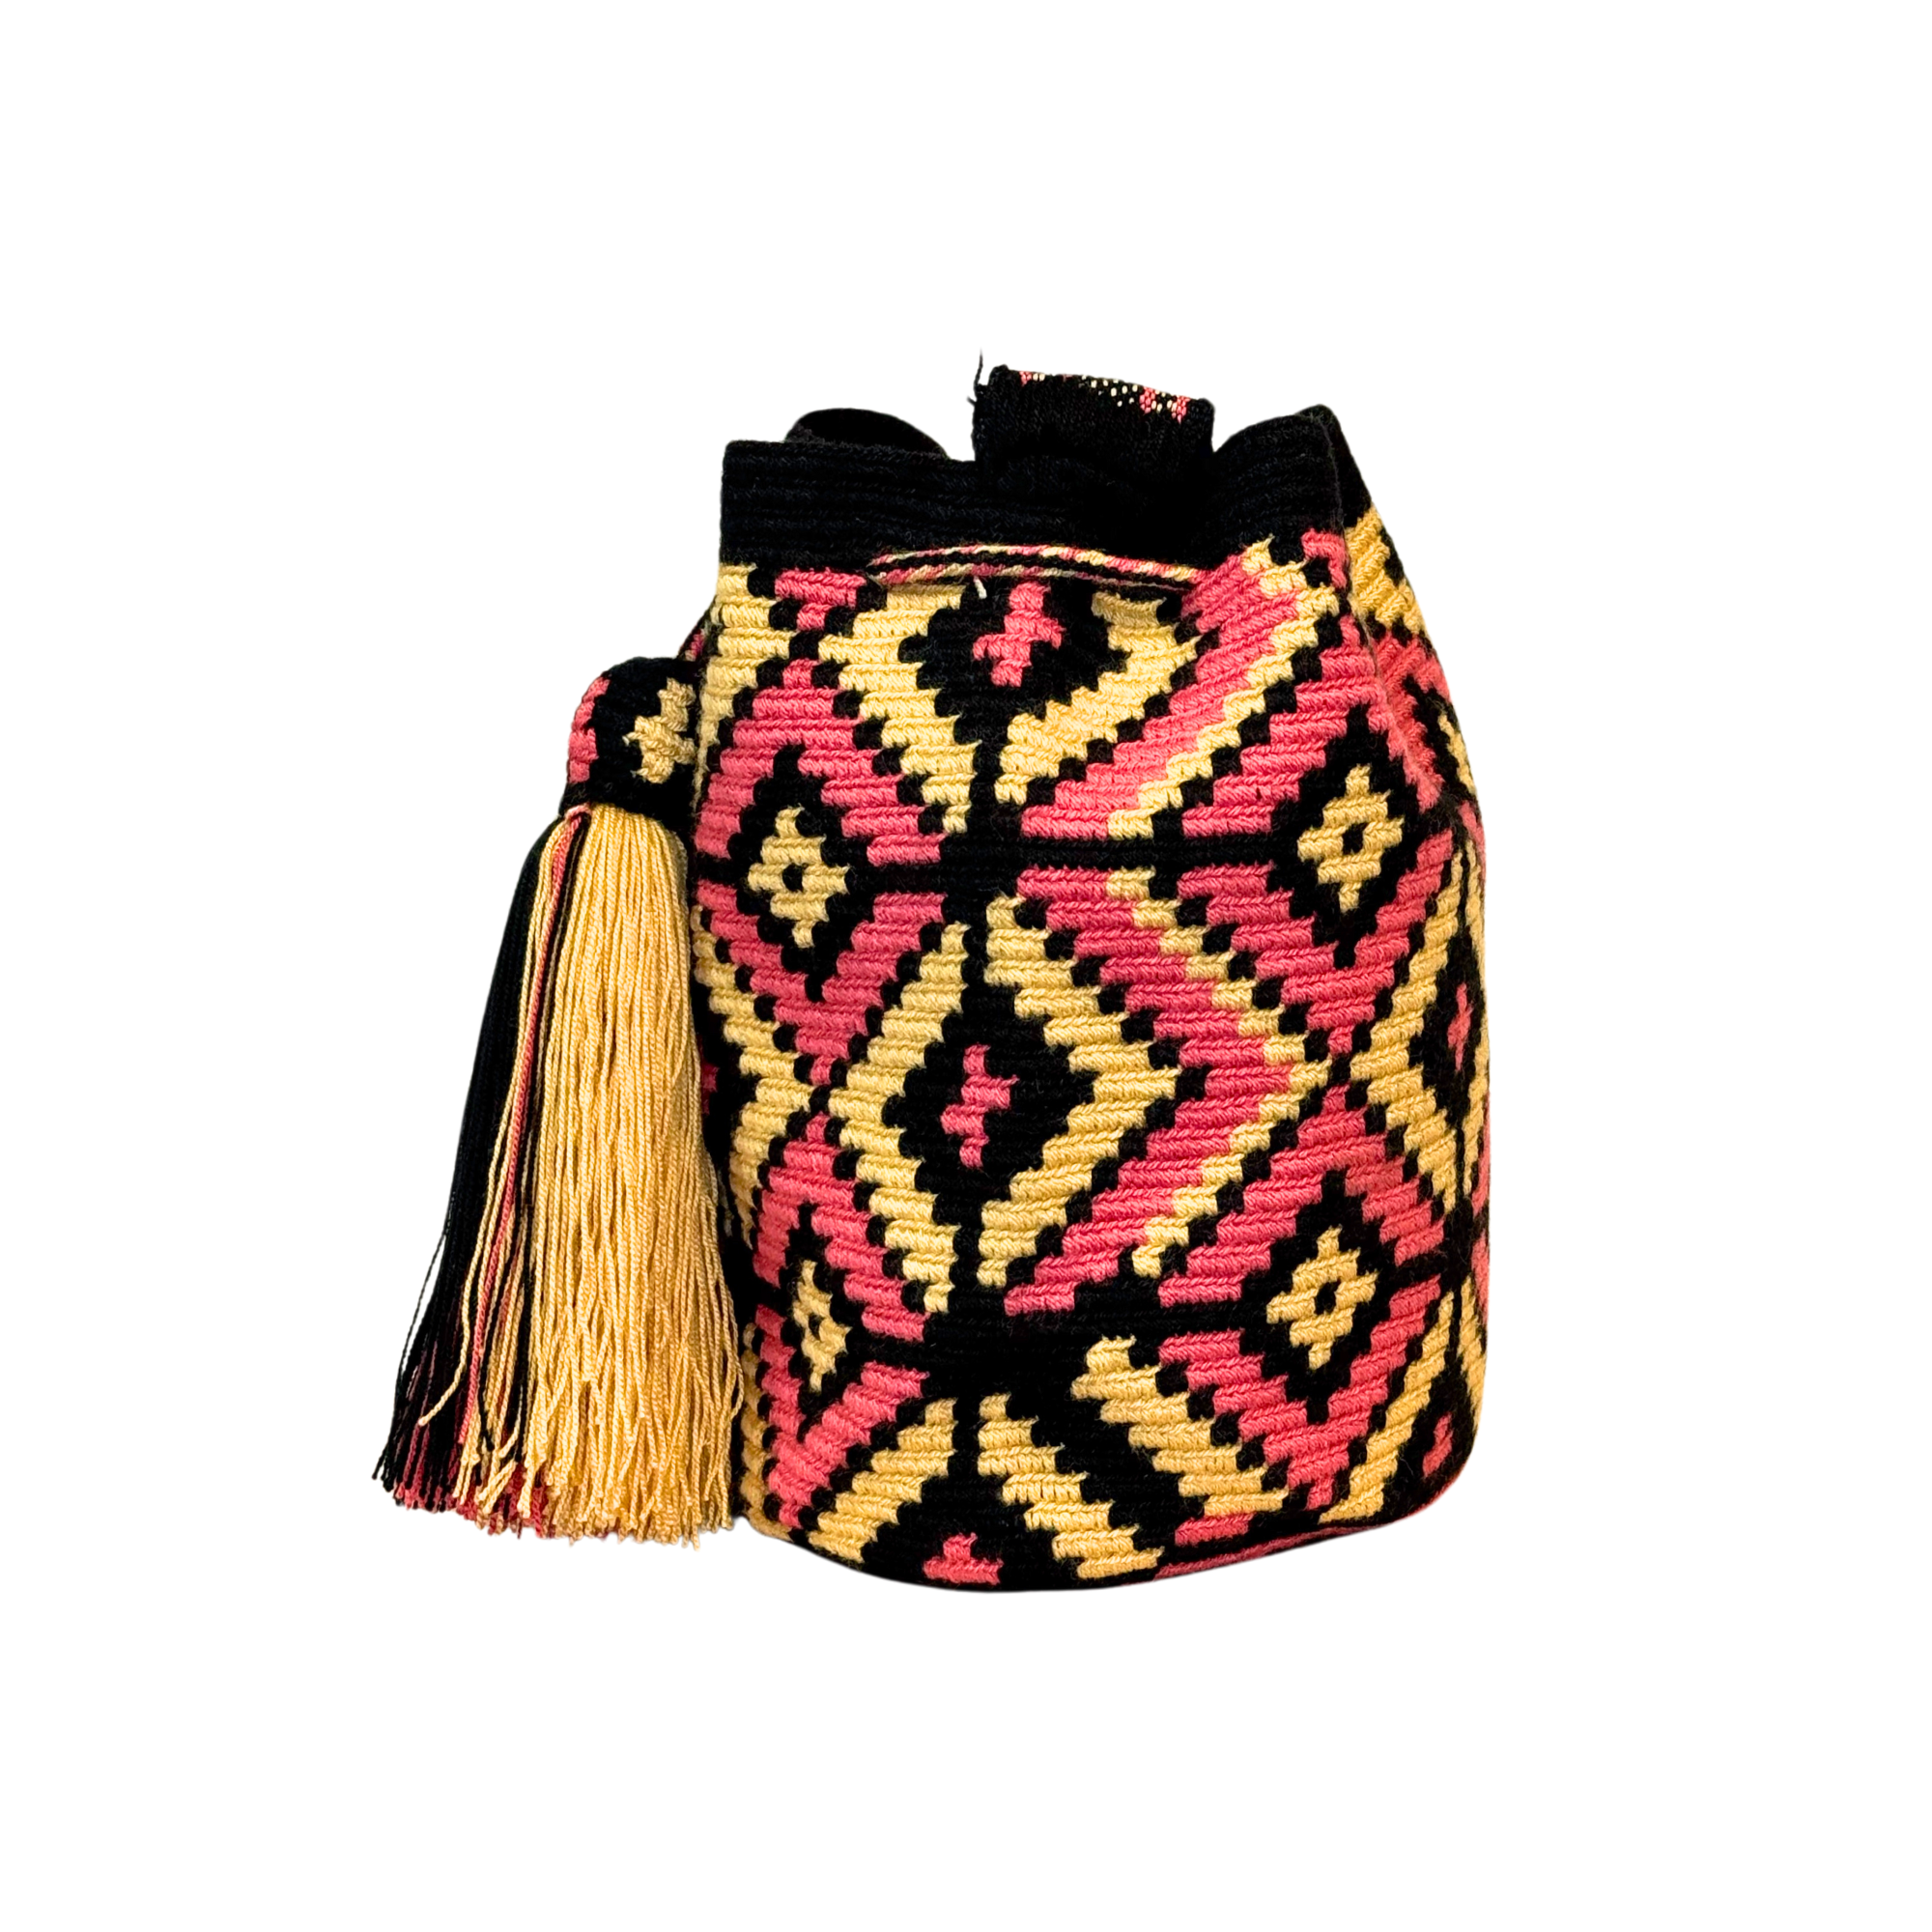 Exclusive Wayuu mochila bag | Medium Woven Crossbody Handmade Gorrito Mochila | Pink, beige and black rhombus solid strap